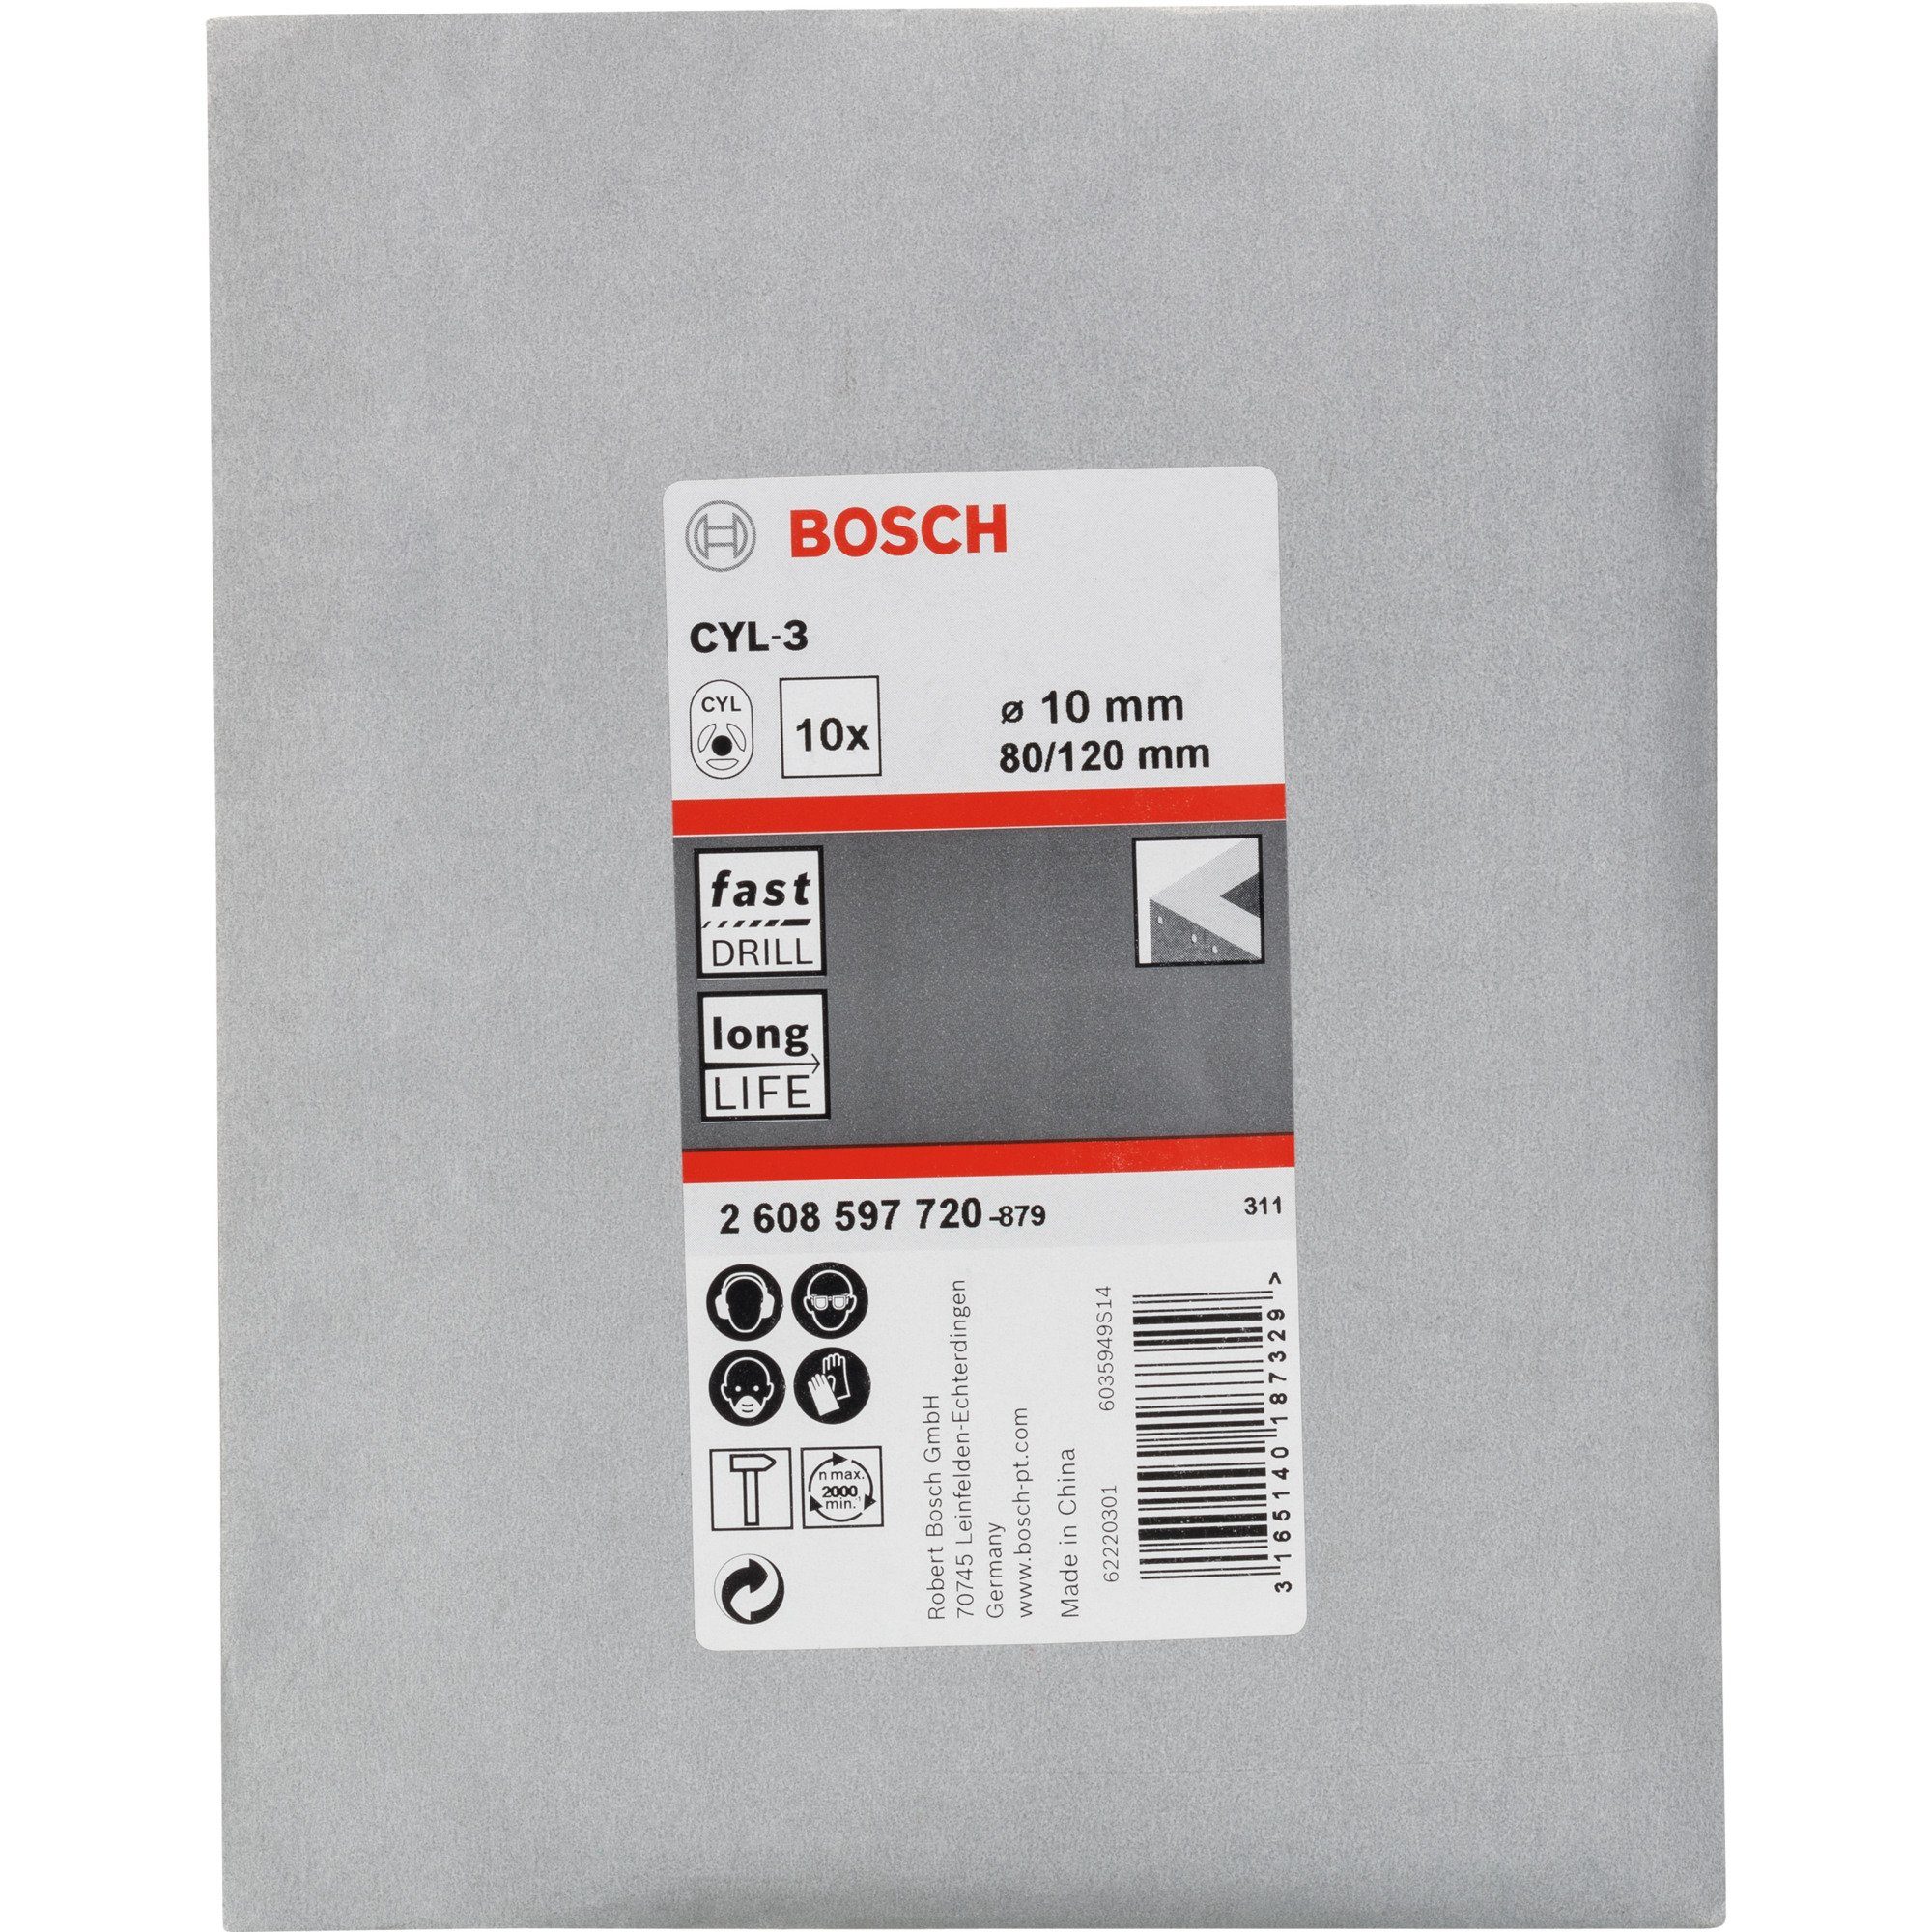 BOSCH Bohrer- und Bitset CYL-3, Bosch Betonbohrer Ø Professional 10mm